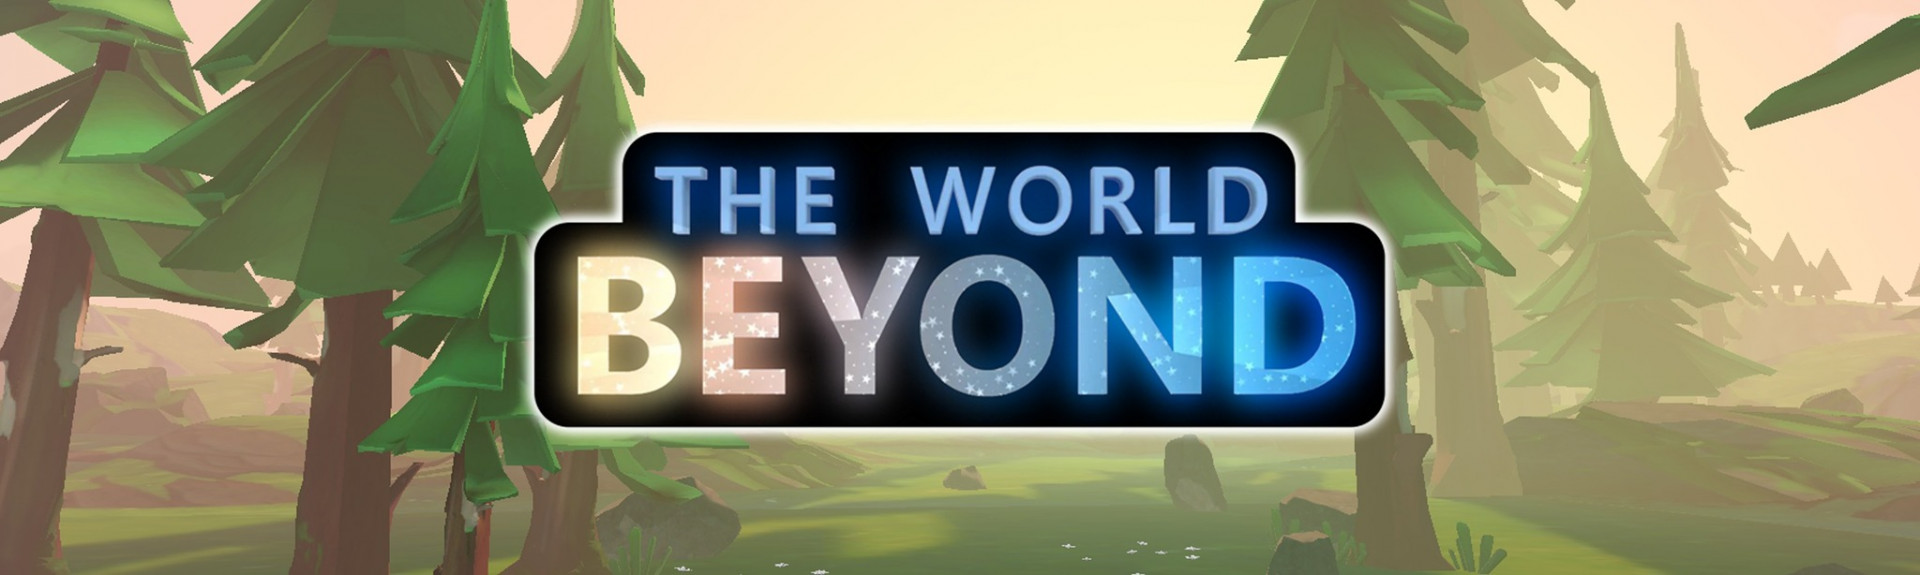 The World Beyond